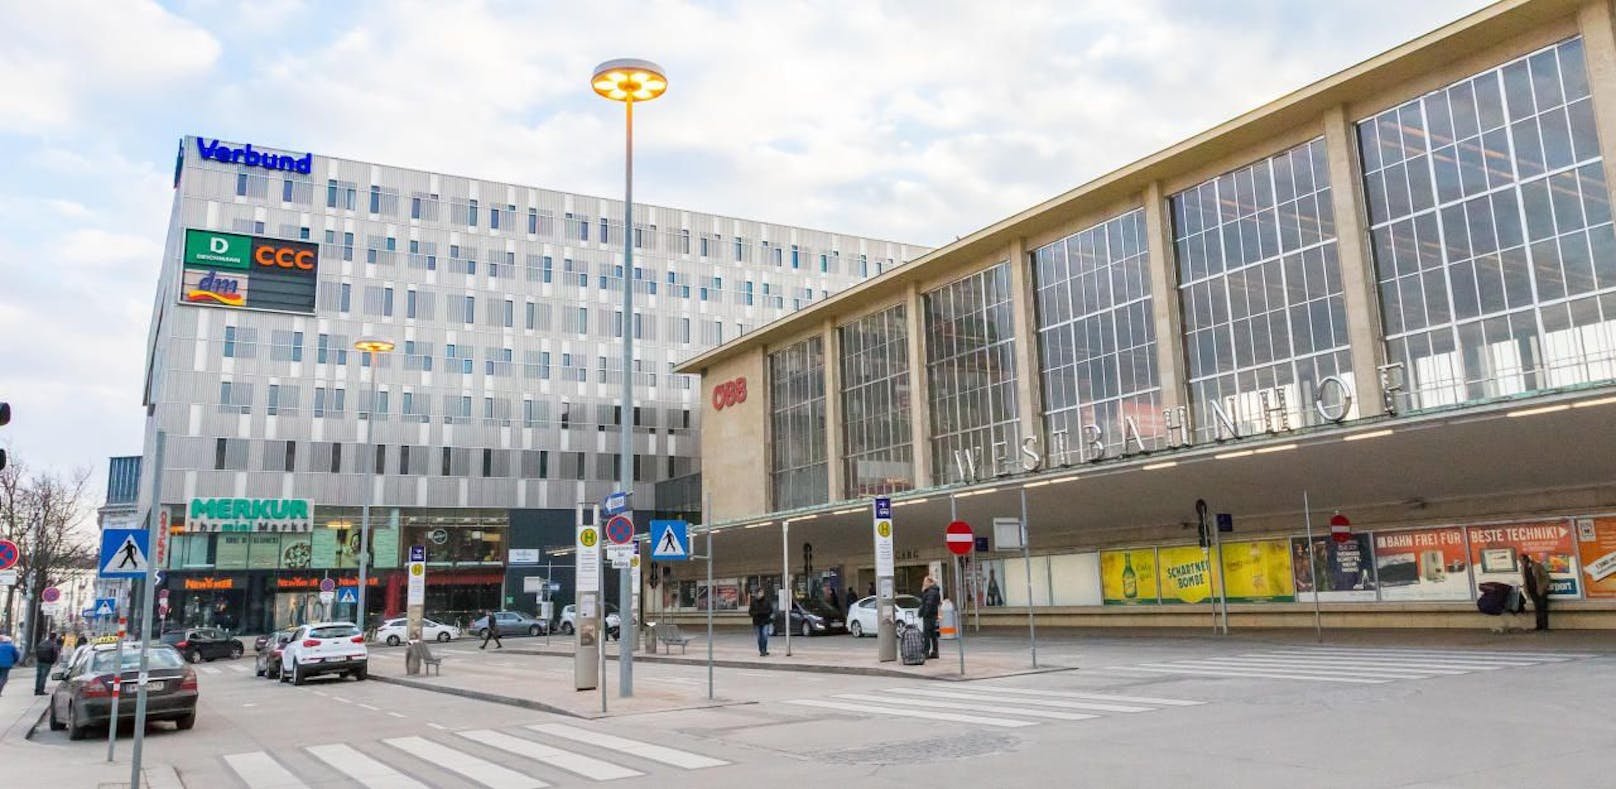 Der 28-Jährige randalierte am Westbahnhof in Wien